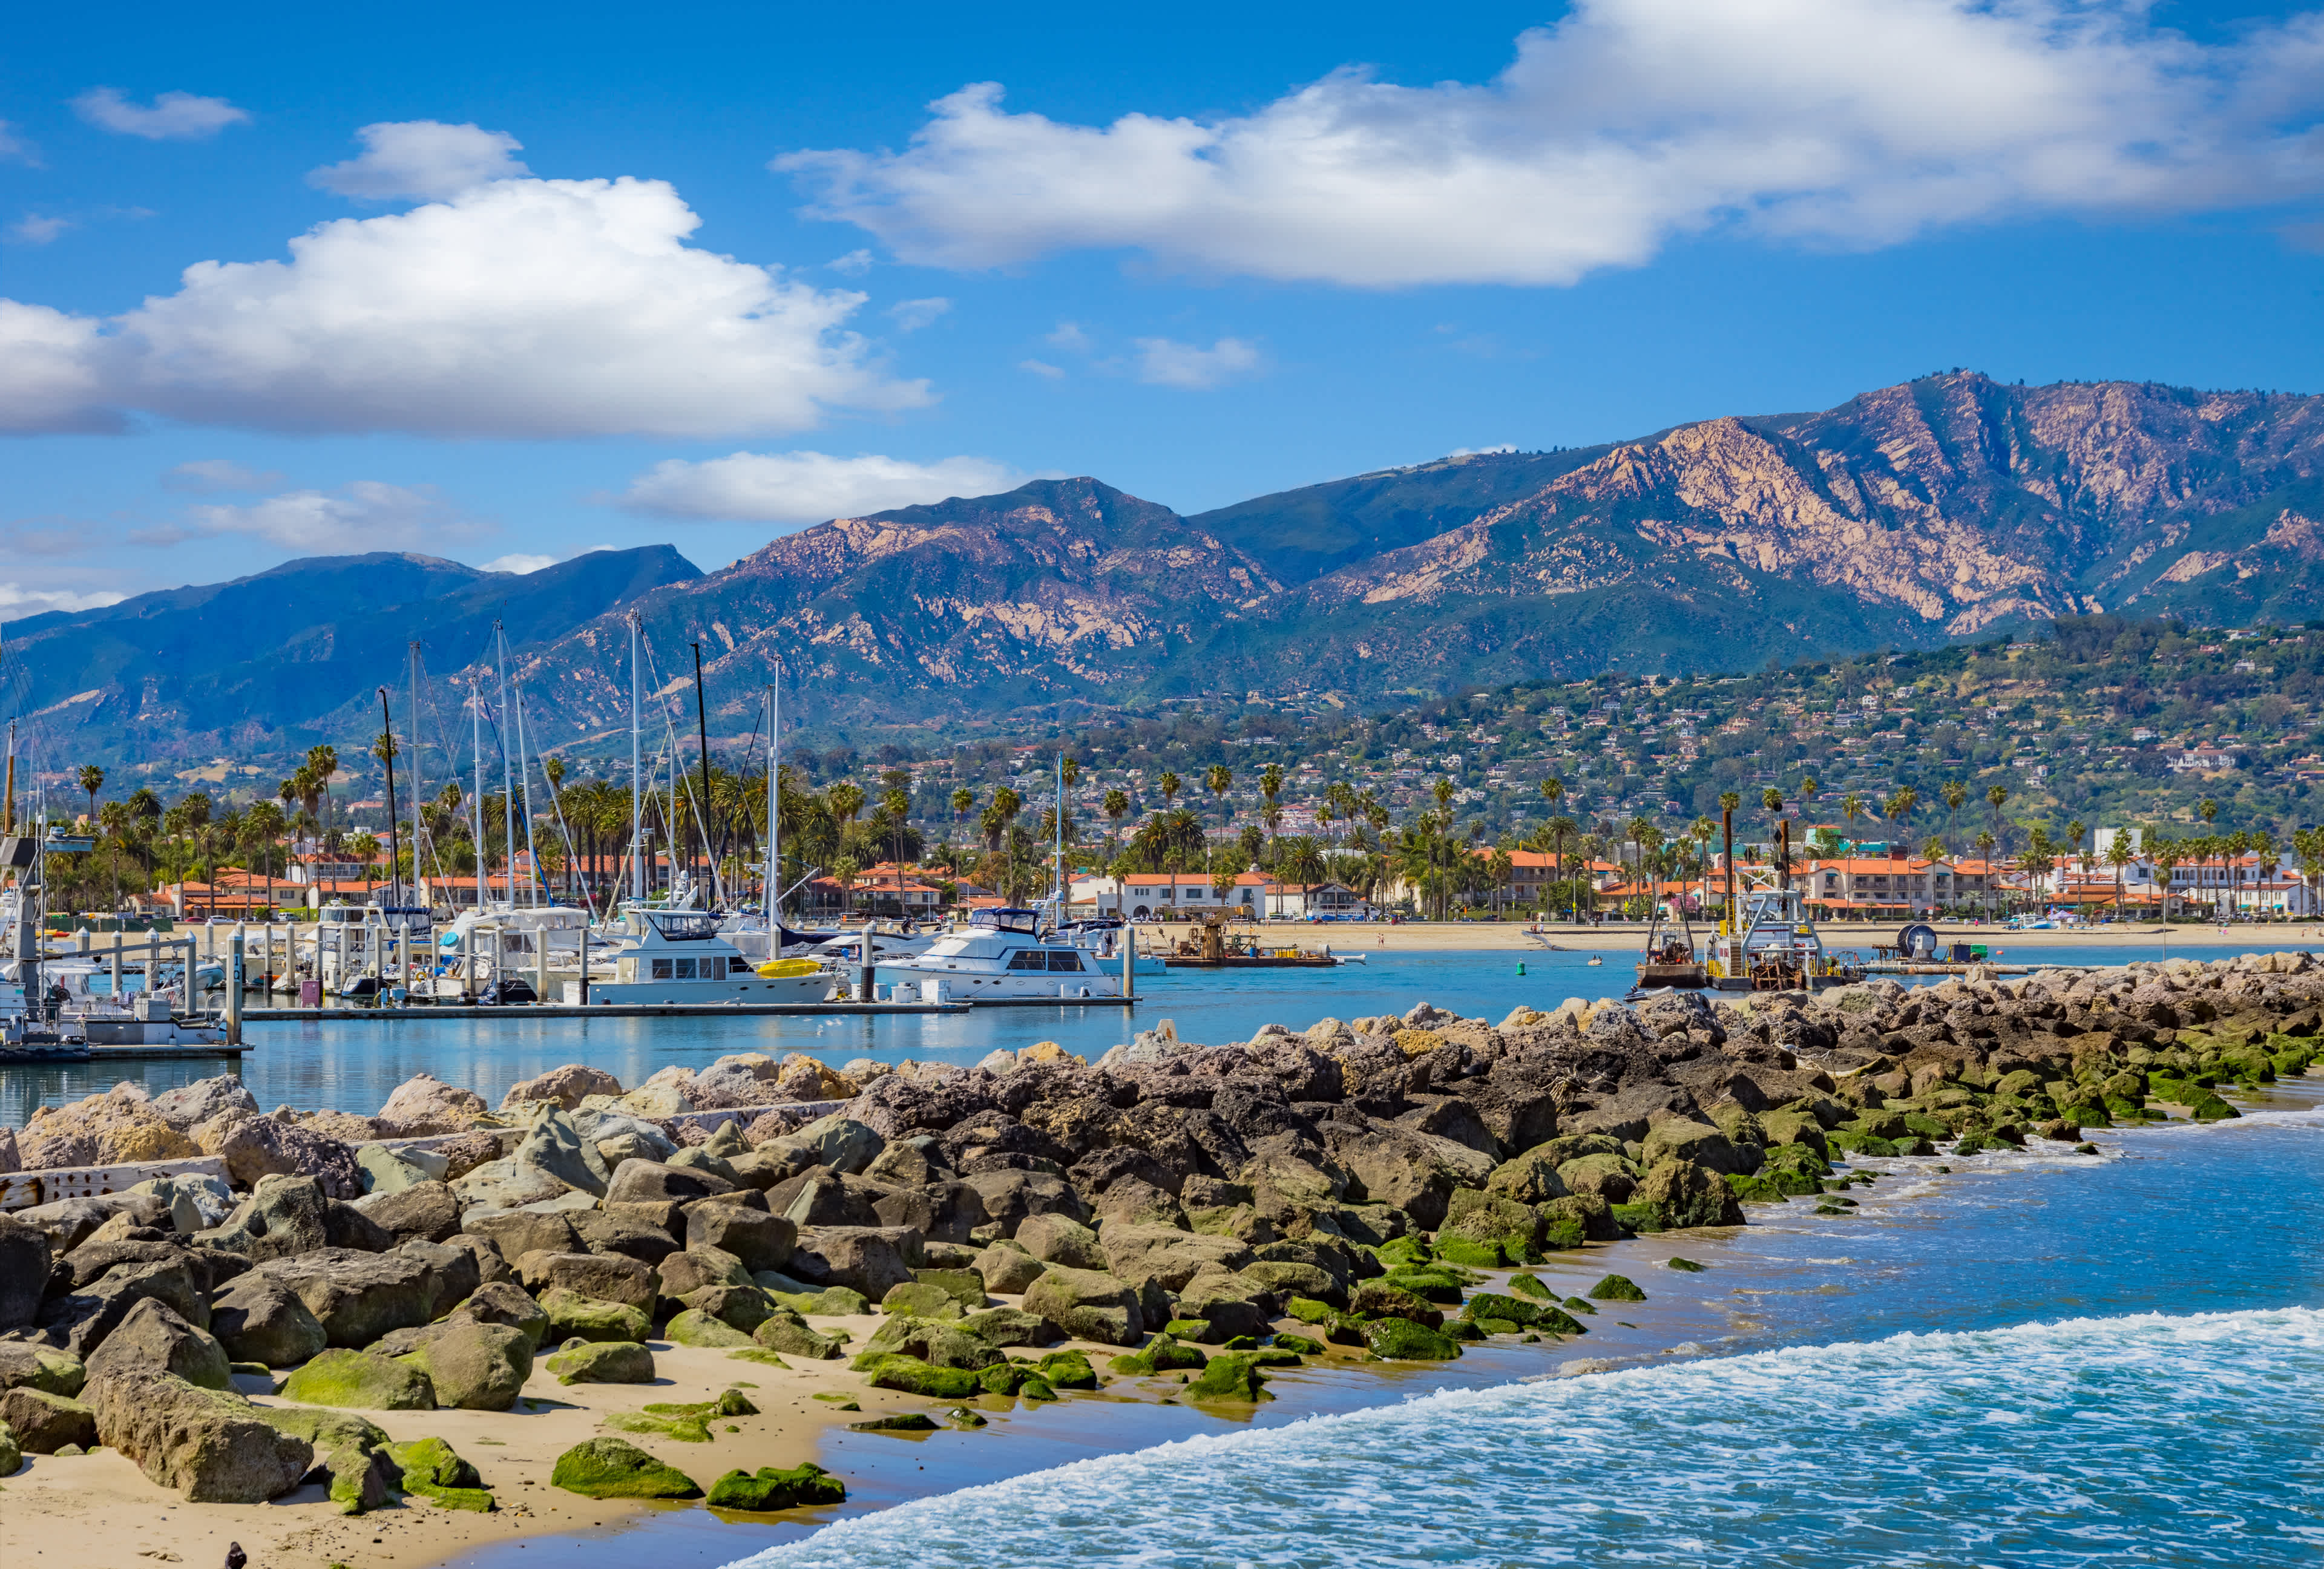 Marina de Santa Barbara avec bateaux de plaisance, Californie